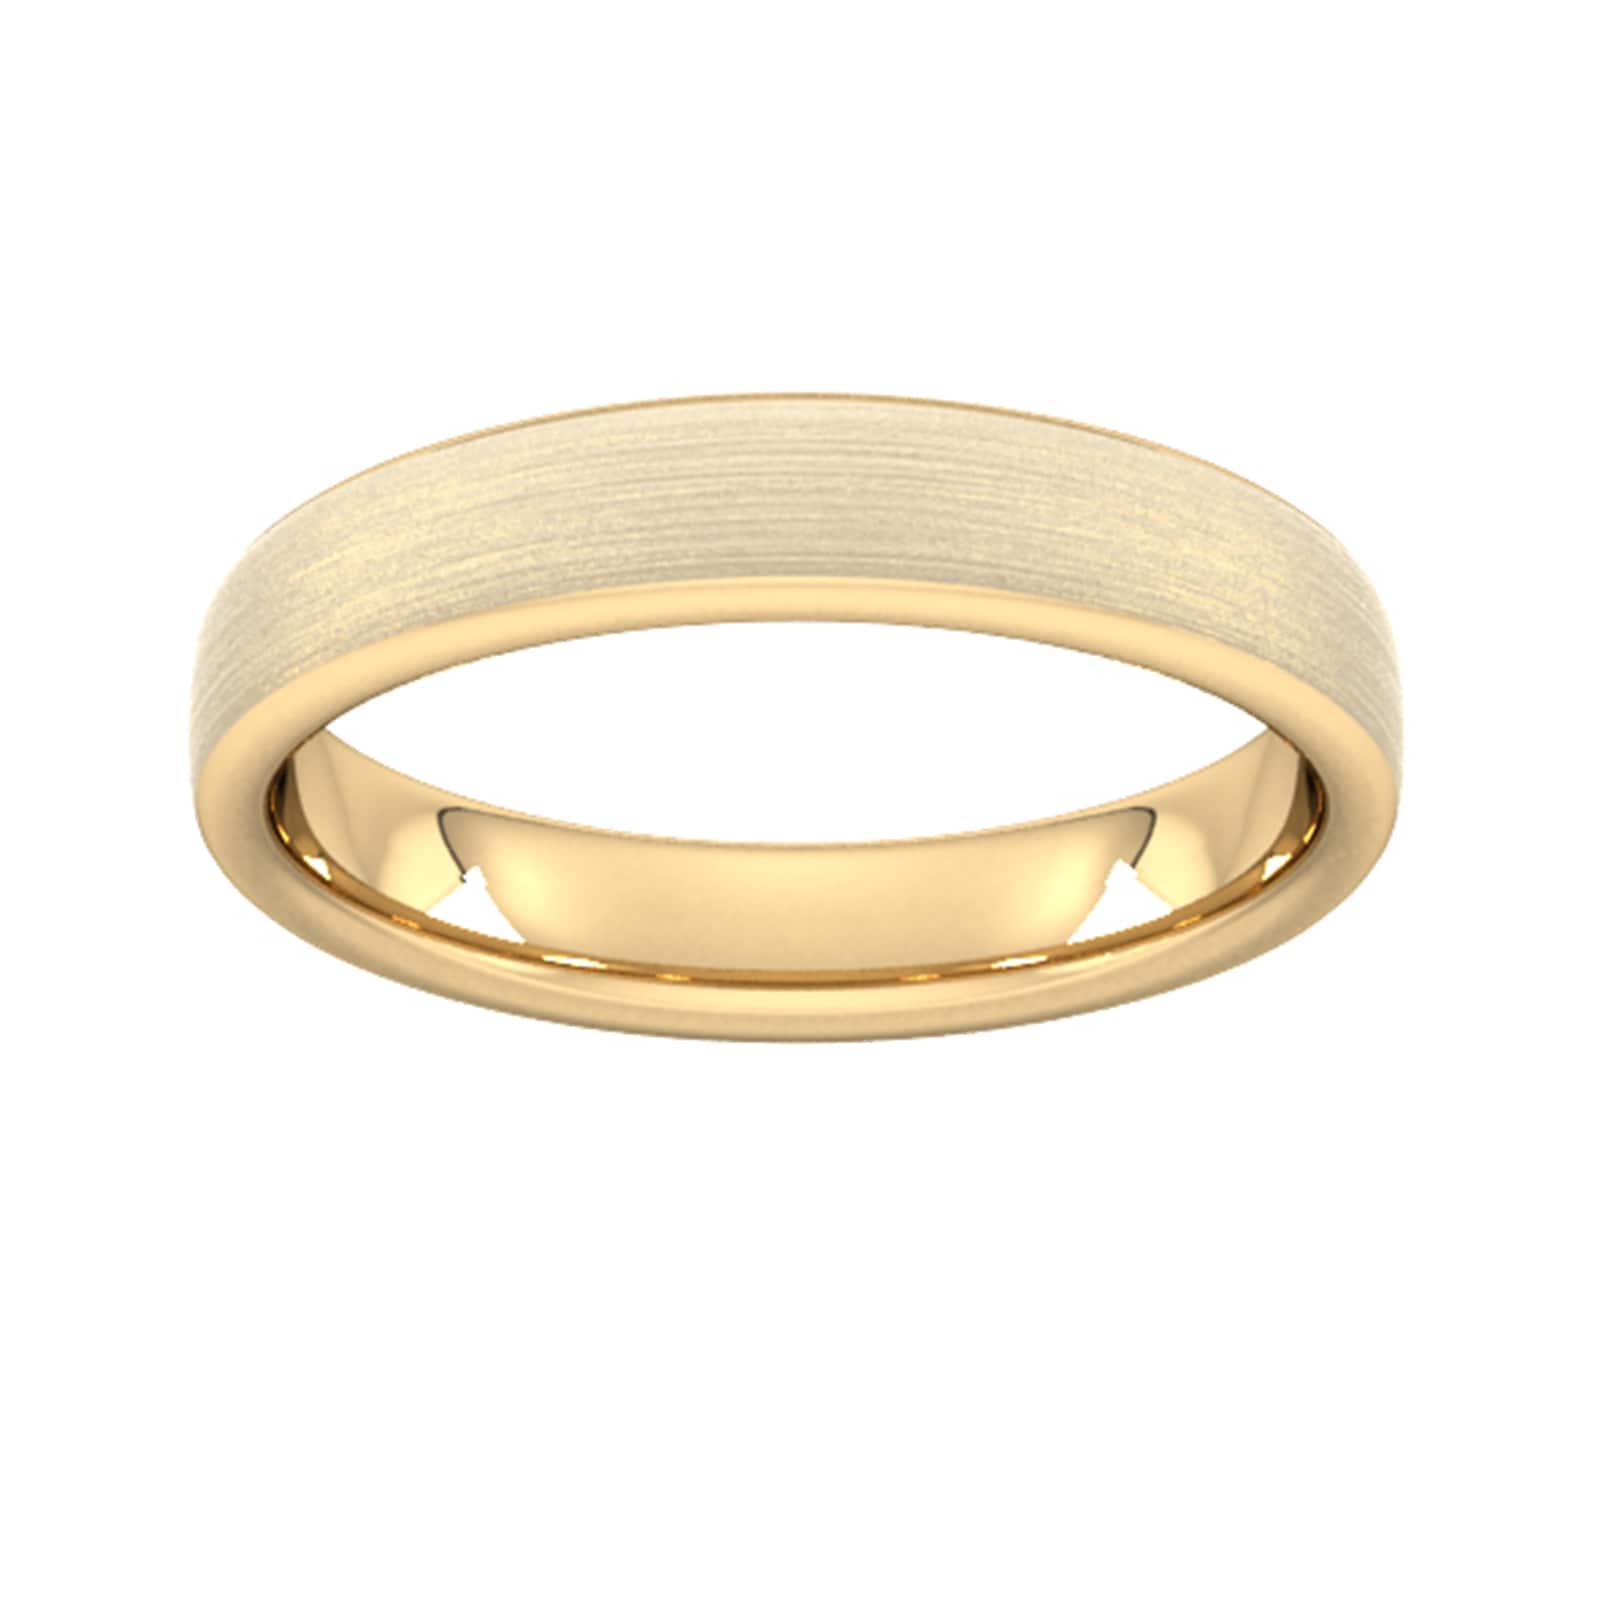 4mm D Shape Standard Matt Finished Wedding Ring In 9 Carat Yellow Gold - Ring Size J